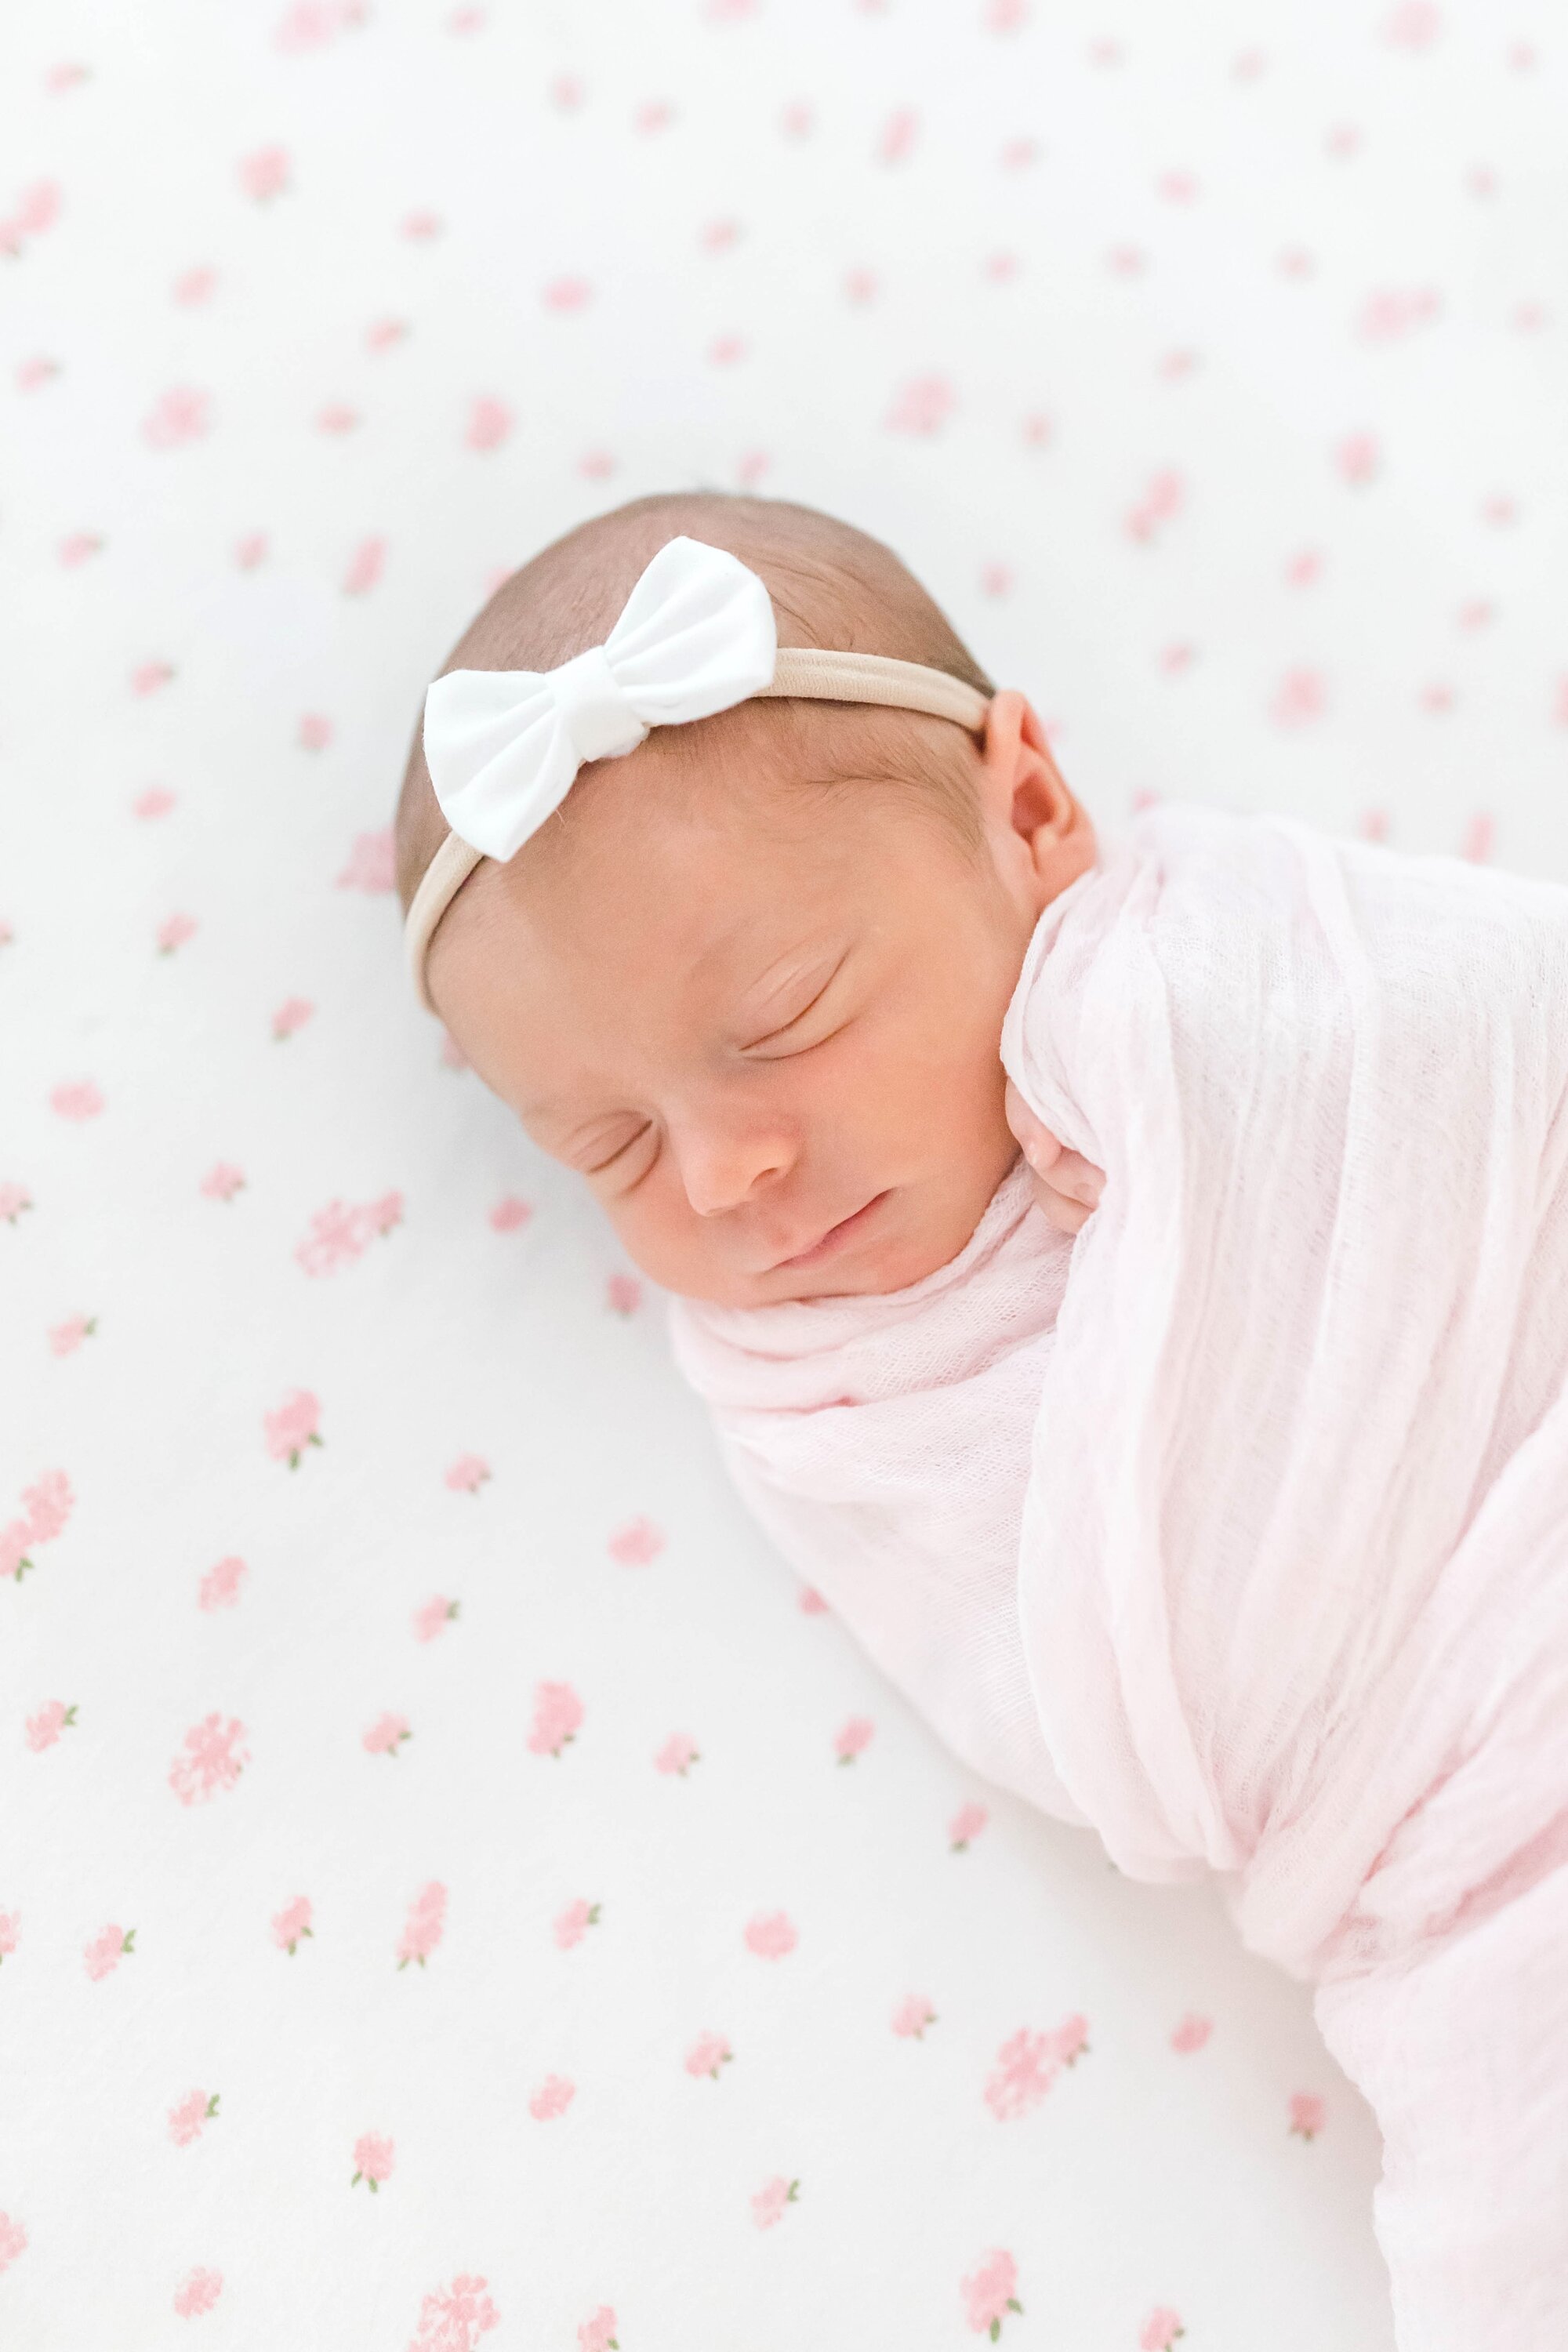 Ilardo Newborn-170_Maryland-newborn-family-photographer-anna-grace-photography.jpg